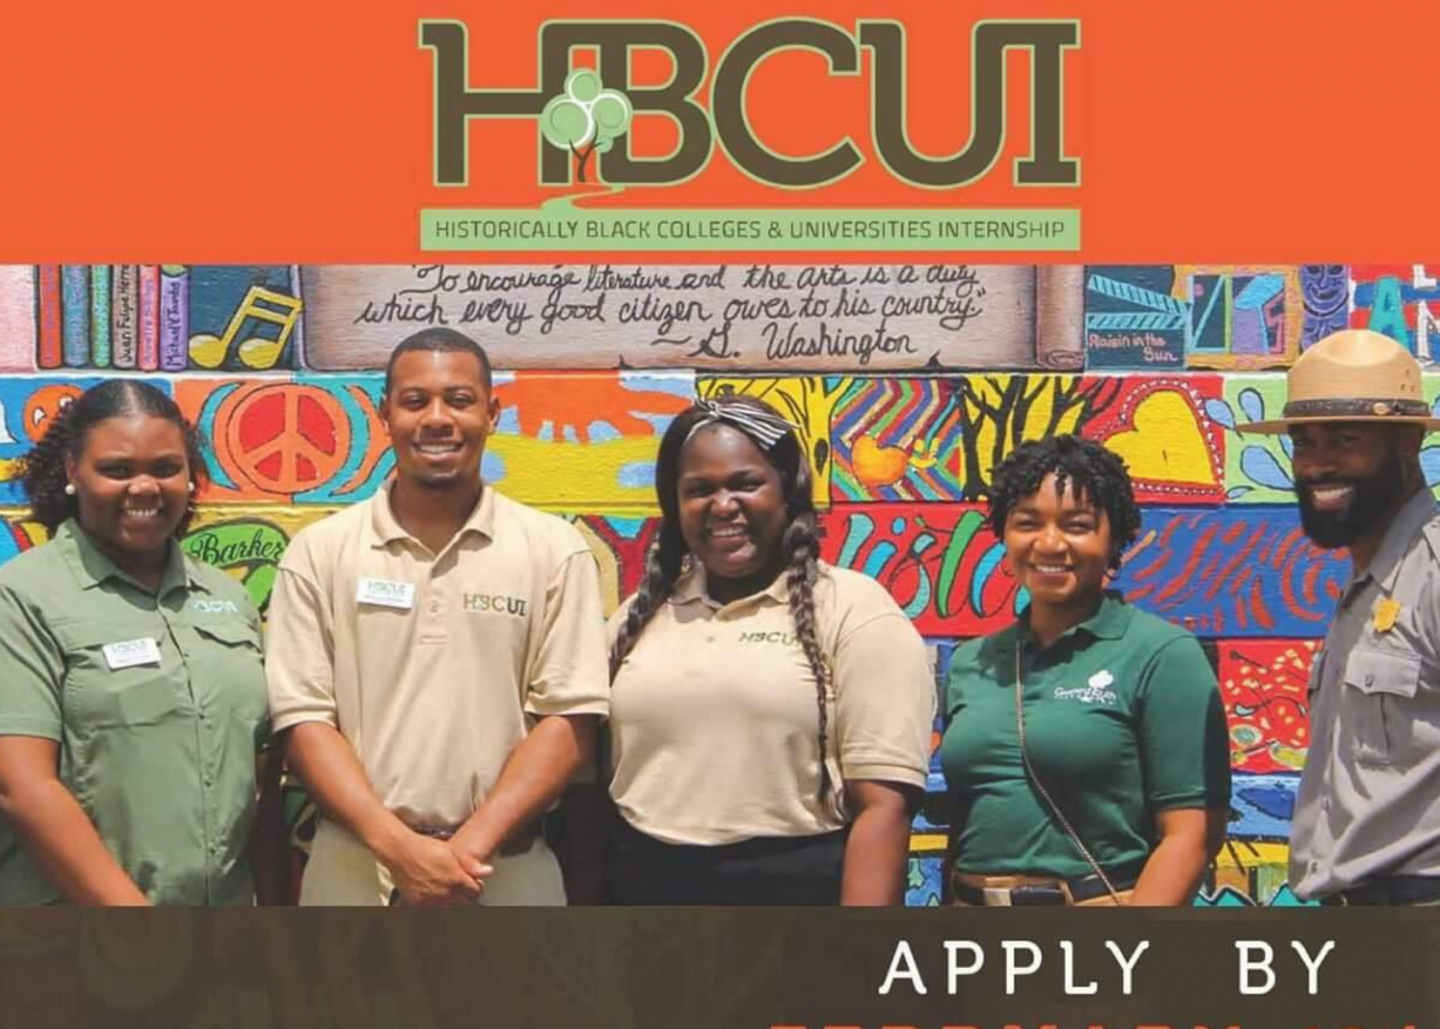 Heritage Tourism Internships for HBCU Students